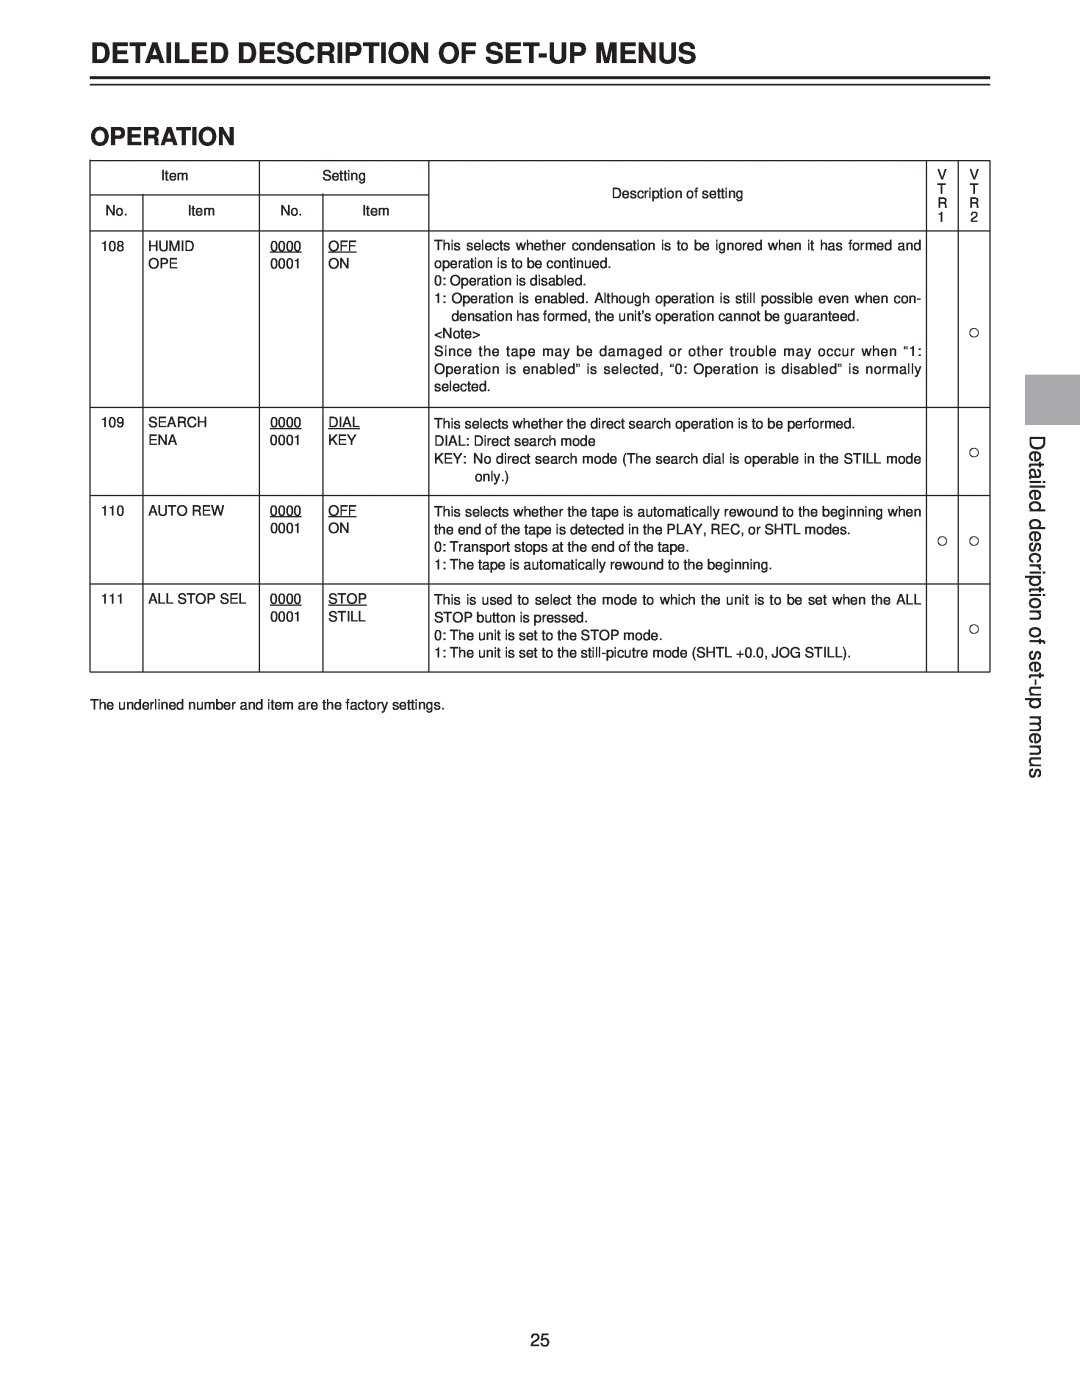 Panasonic AJ-LT85P manual Detailed Description Of Set-Up Menus, Operation, Detailed description of set-up menus 